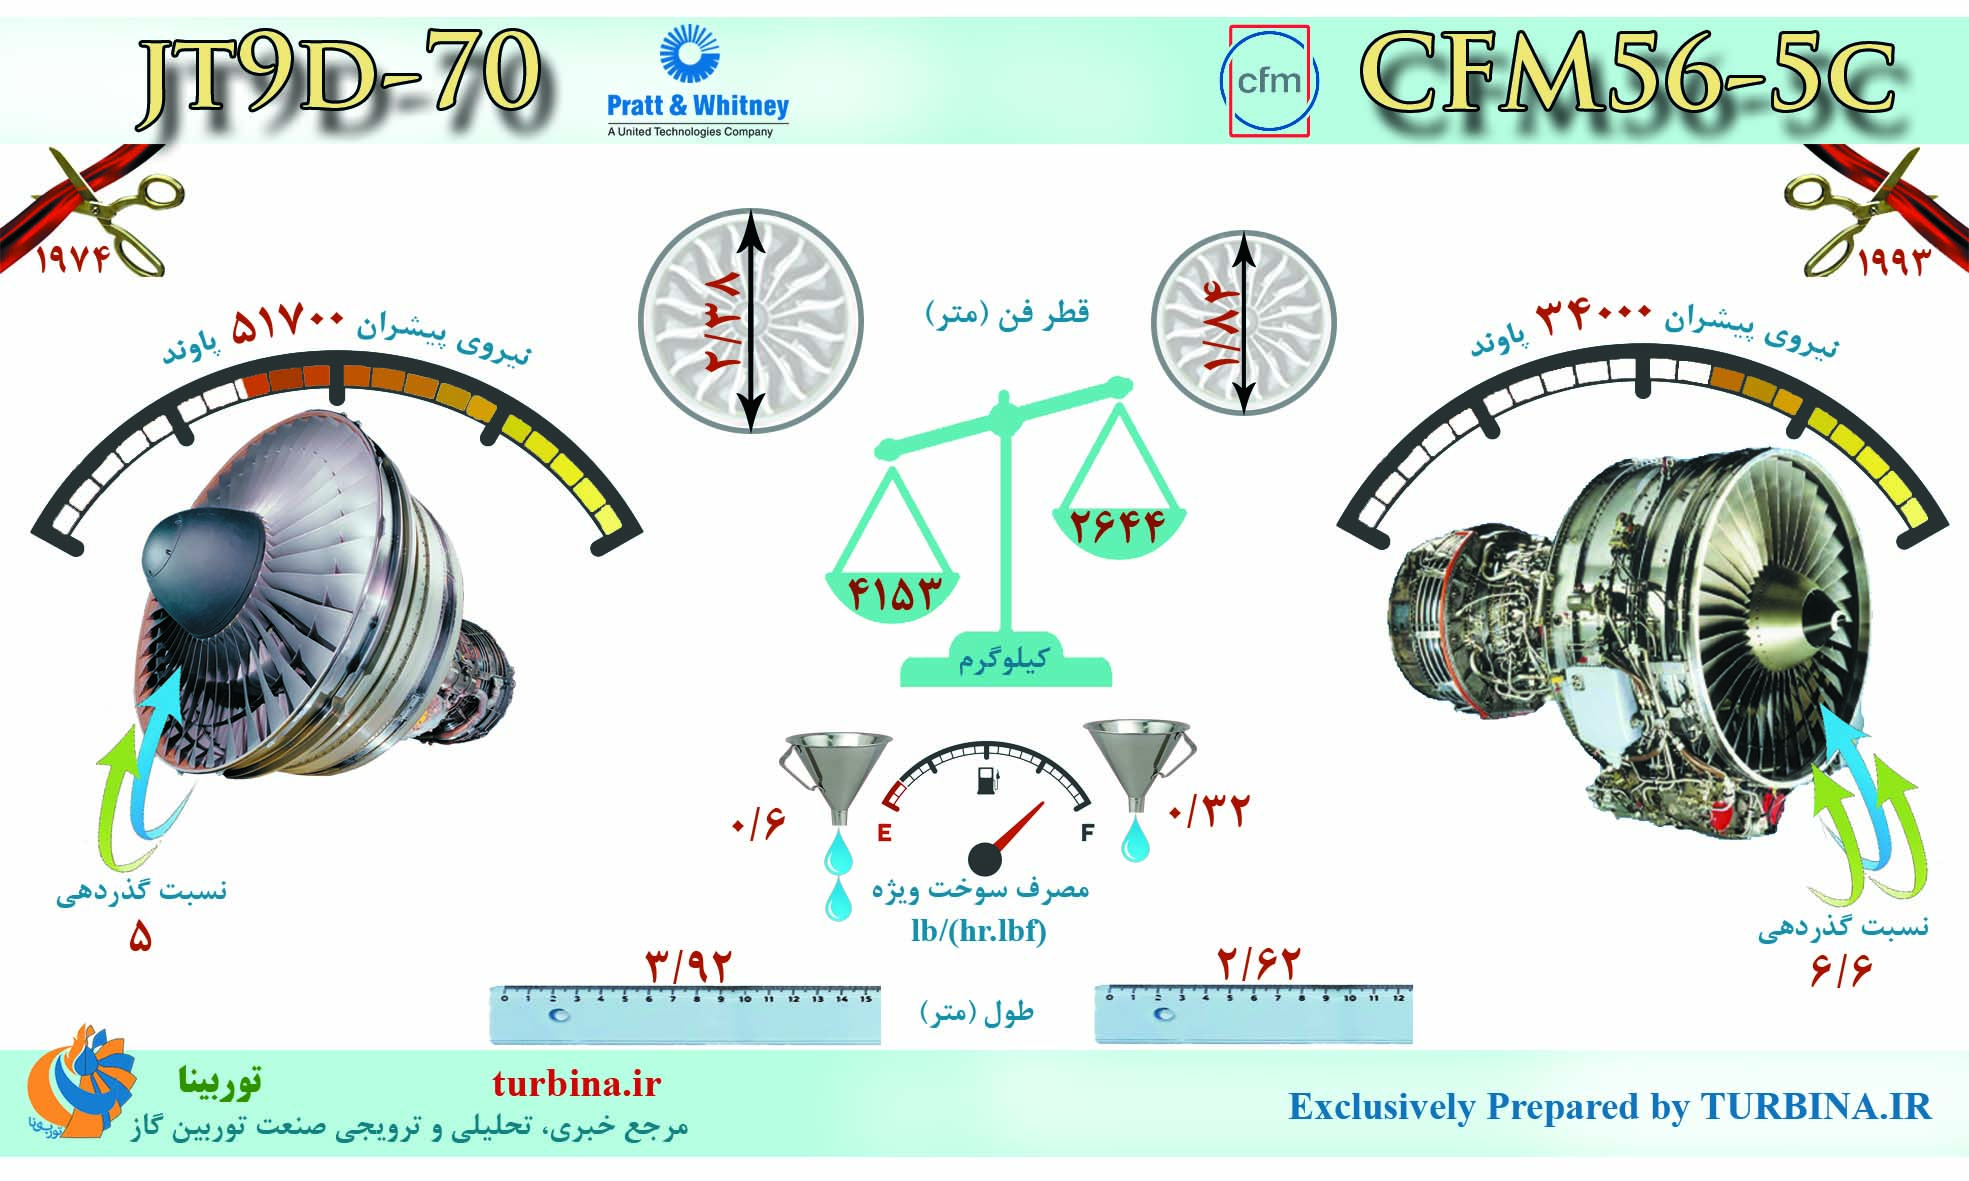 مقایسه موتورهای CFM56-5C و JT9D-70